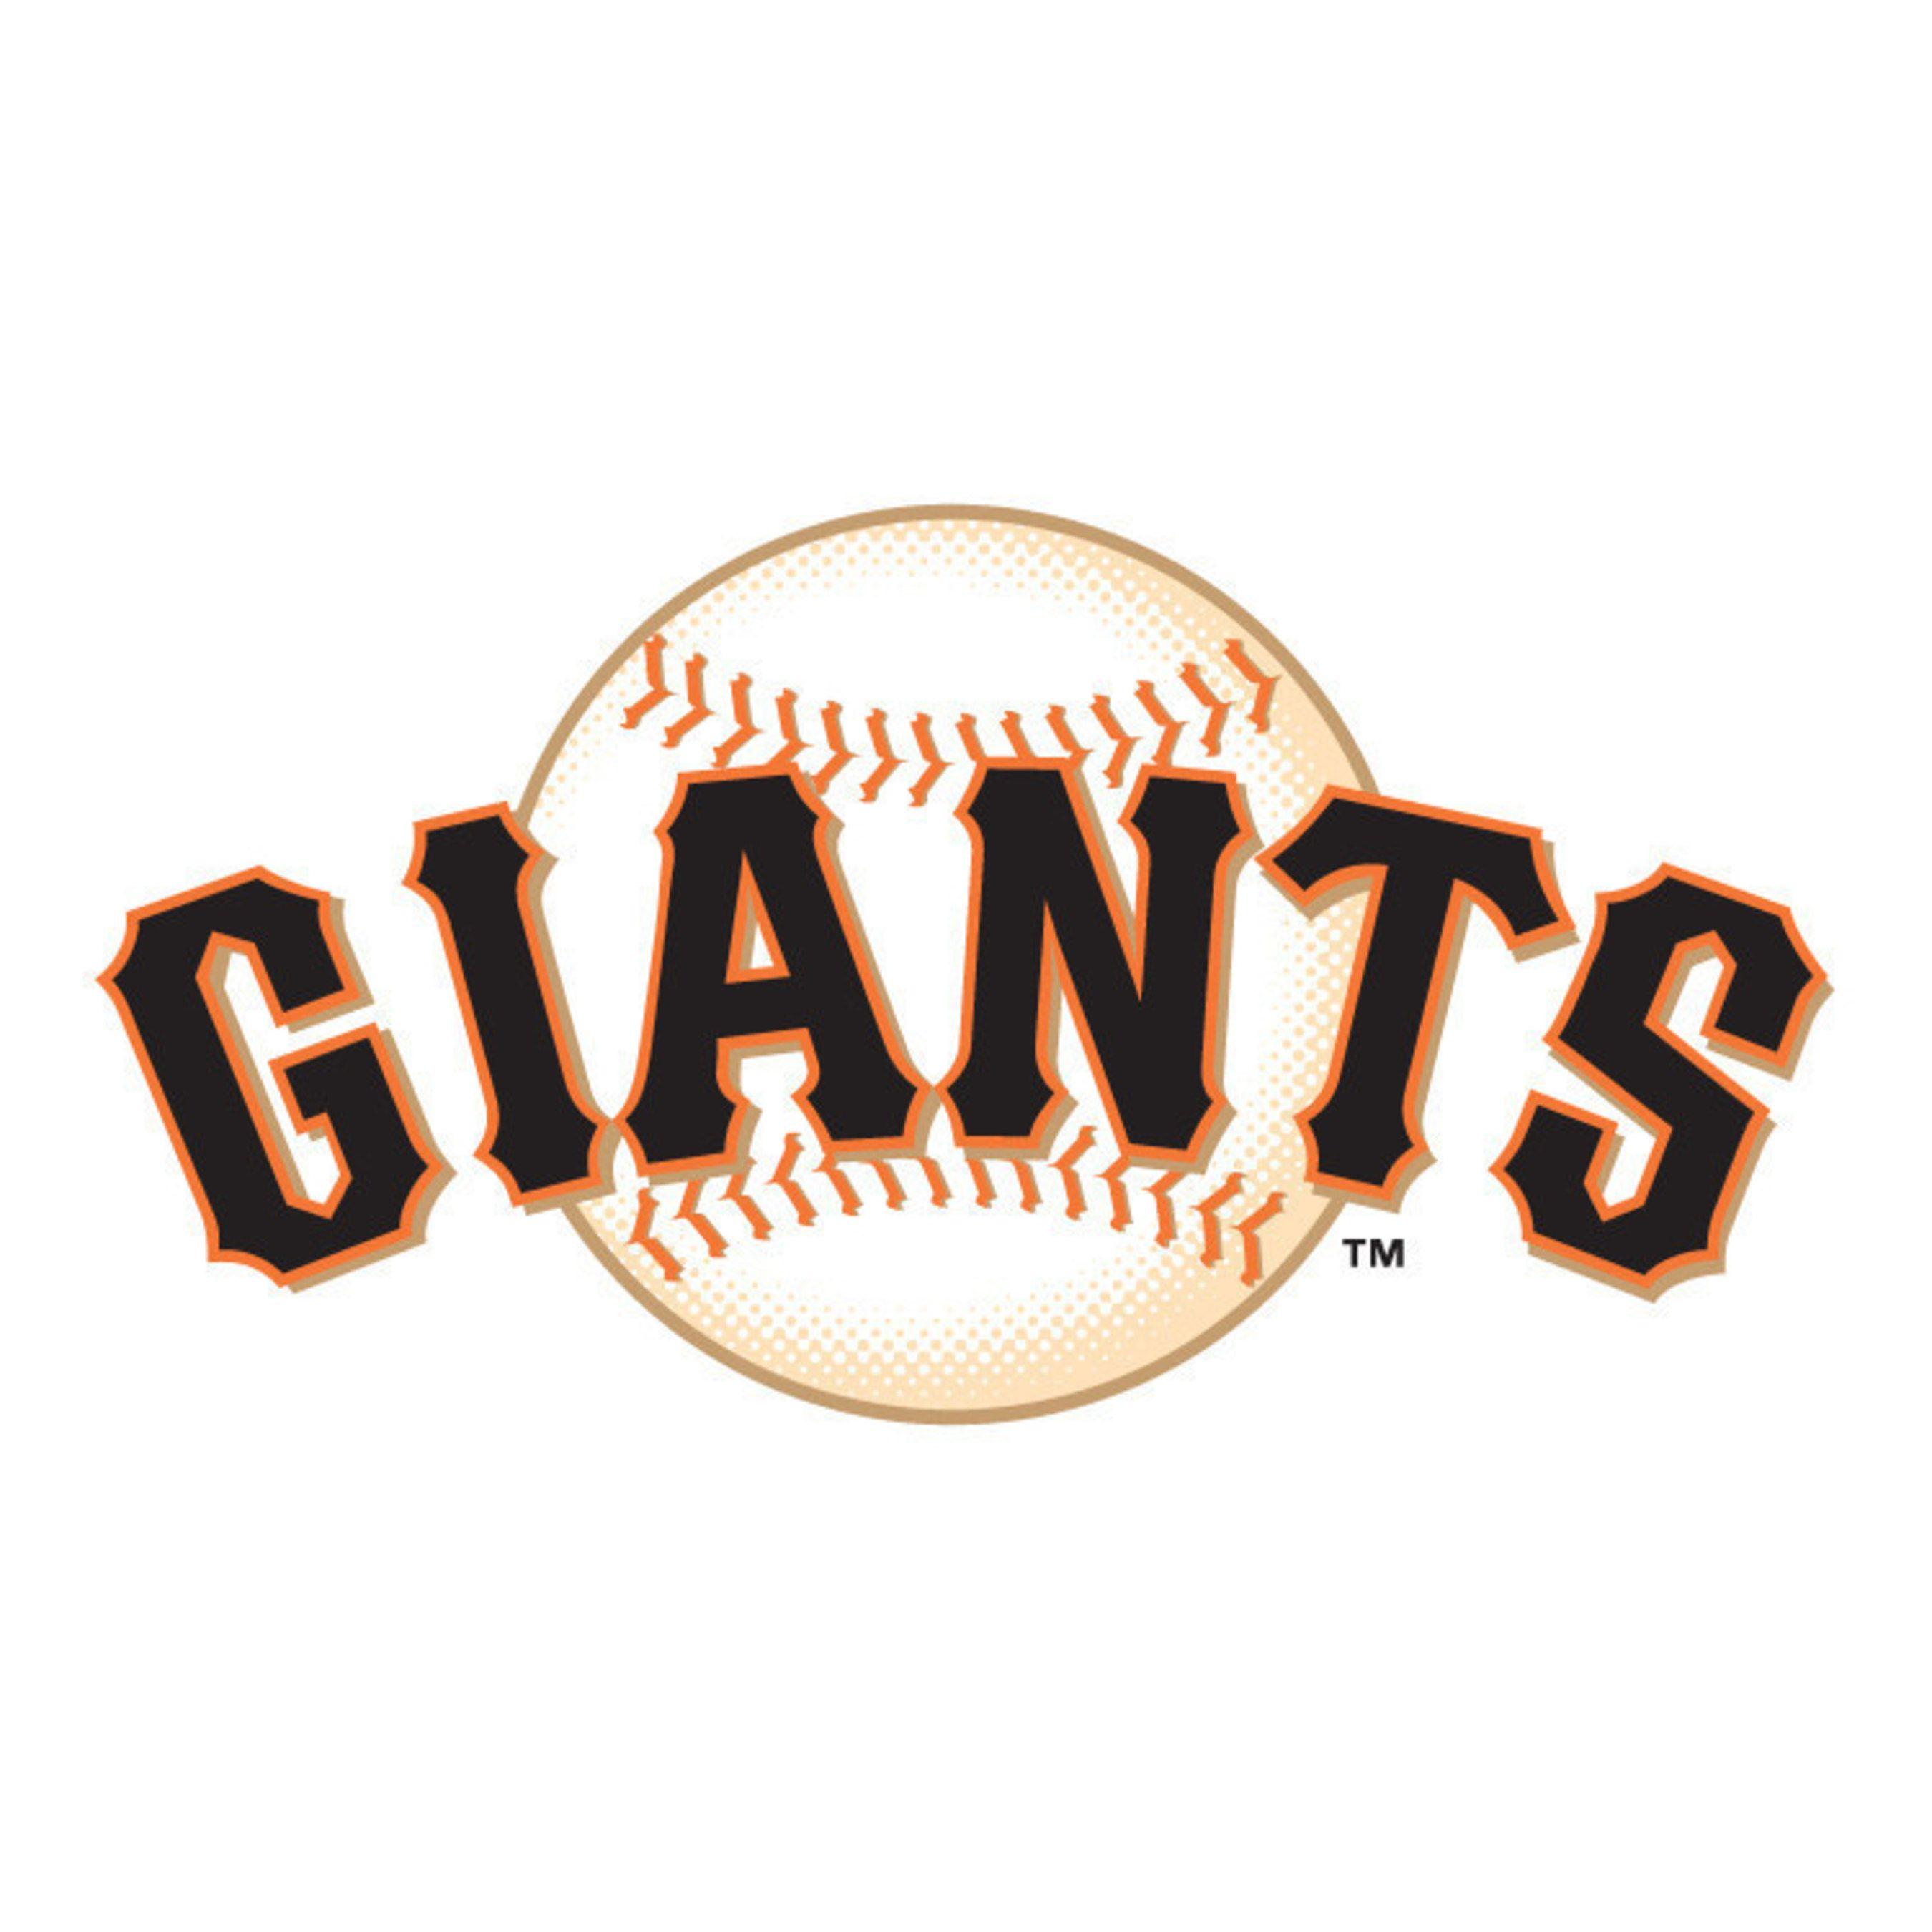 Chemo Logo - Former Giants Pitcher Dave Dravecky To 